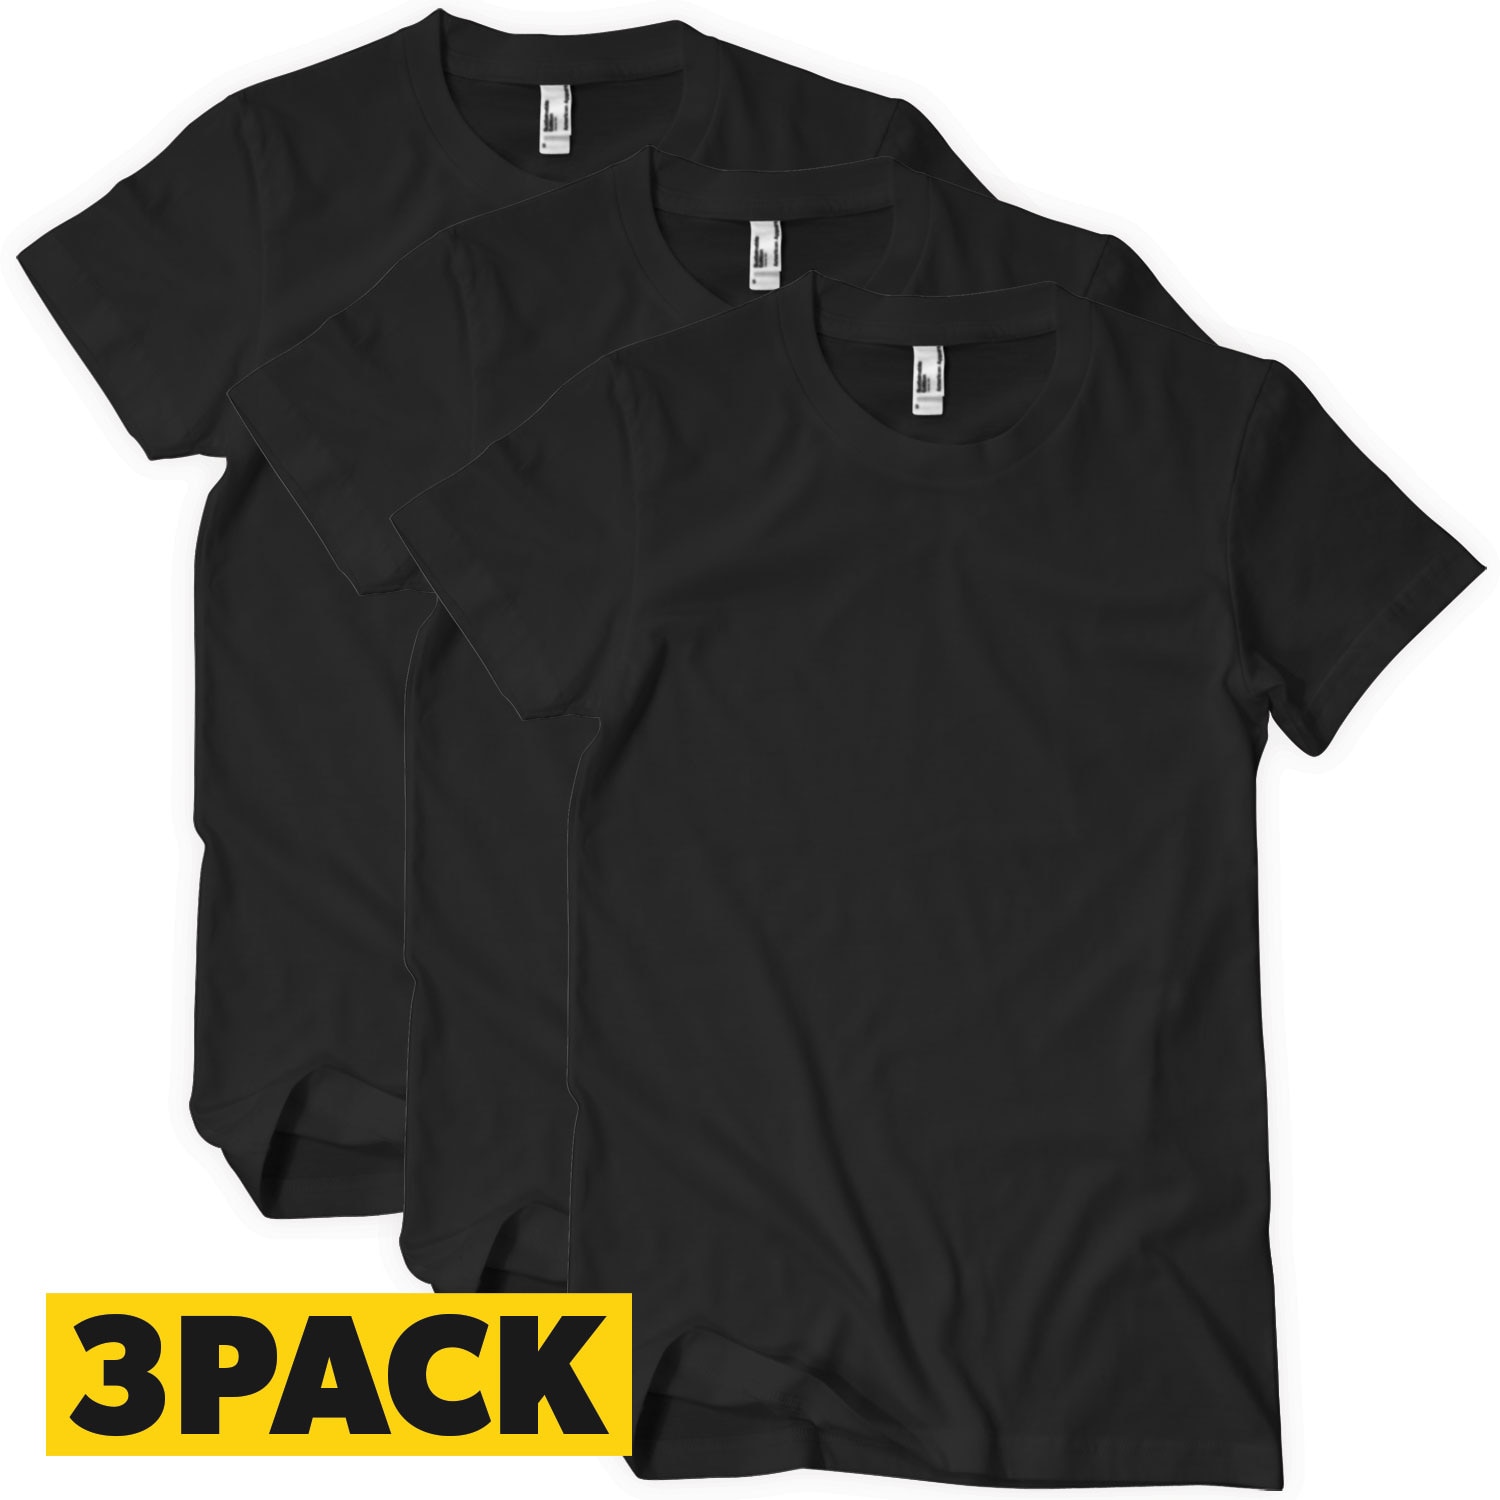 T-Shirts Bigpack Svart - 3 pack